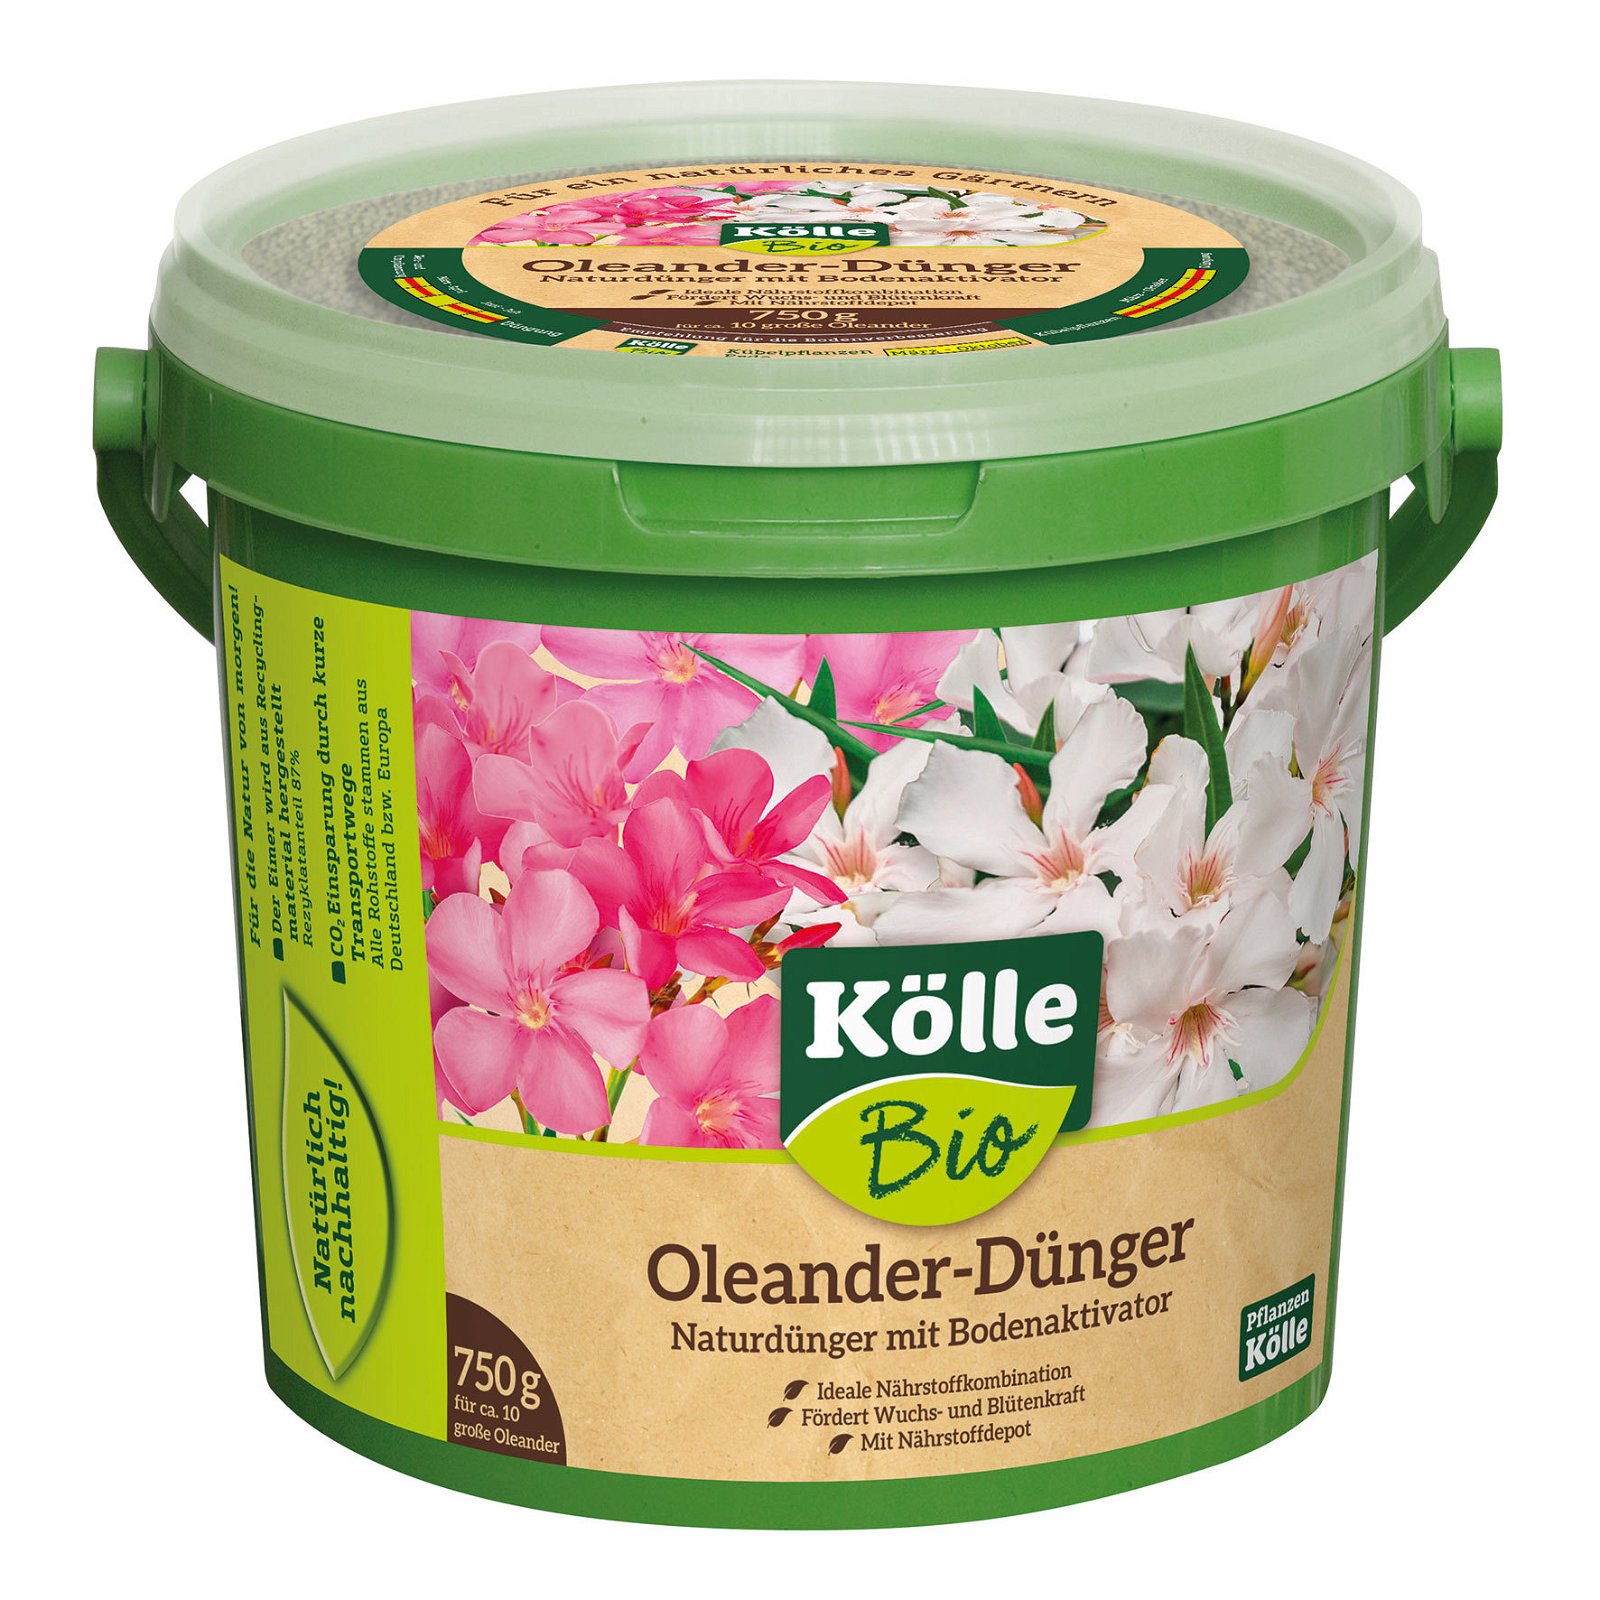 Kölle Bio Oleander-Dünger, Naturdünger mit Bodenaktivator, 750 g Eimer